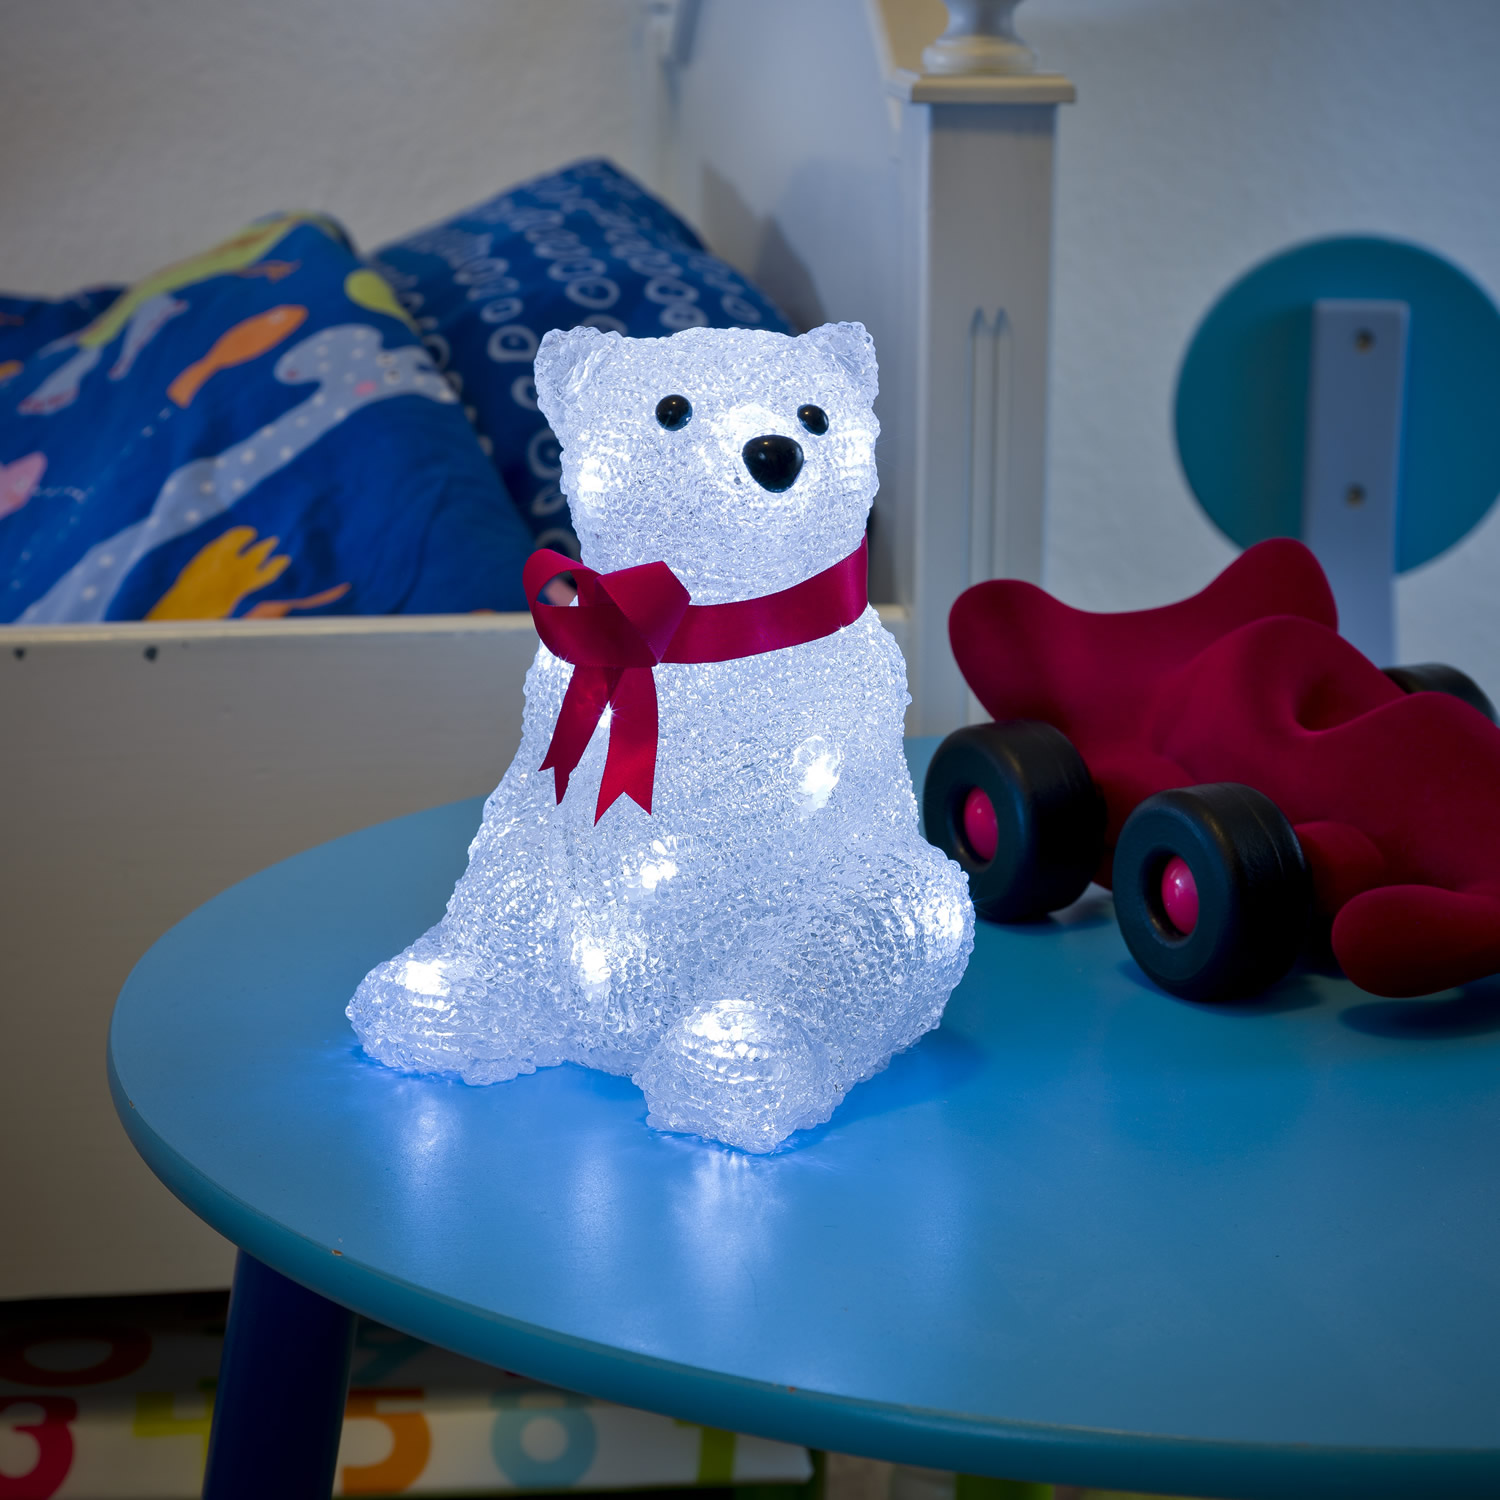 LED ALED Acryl polar bear, sitting with red ribbon